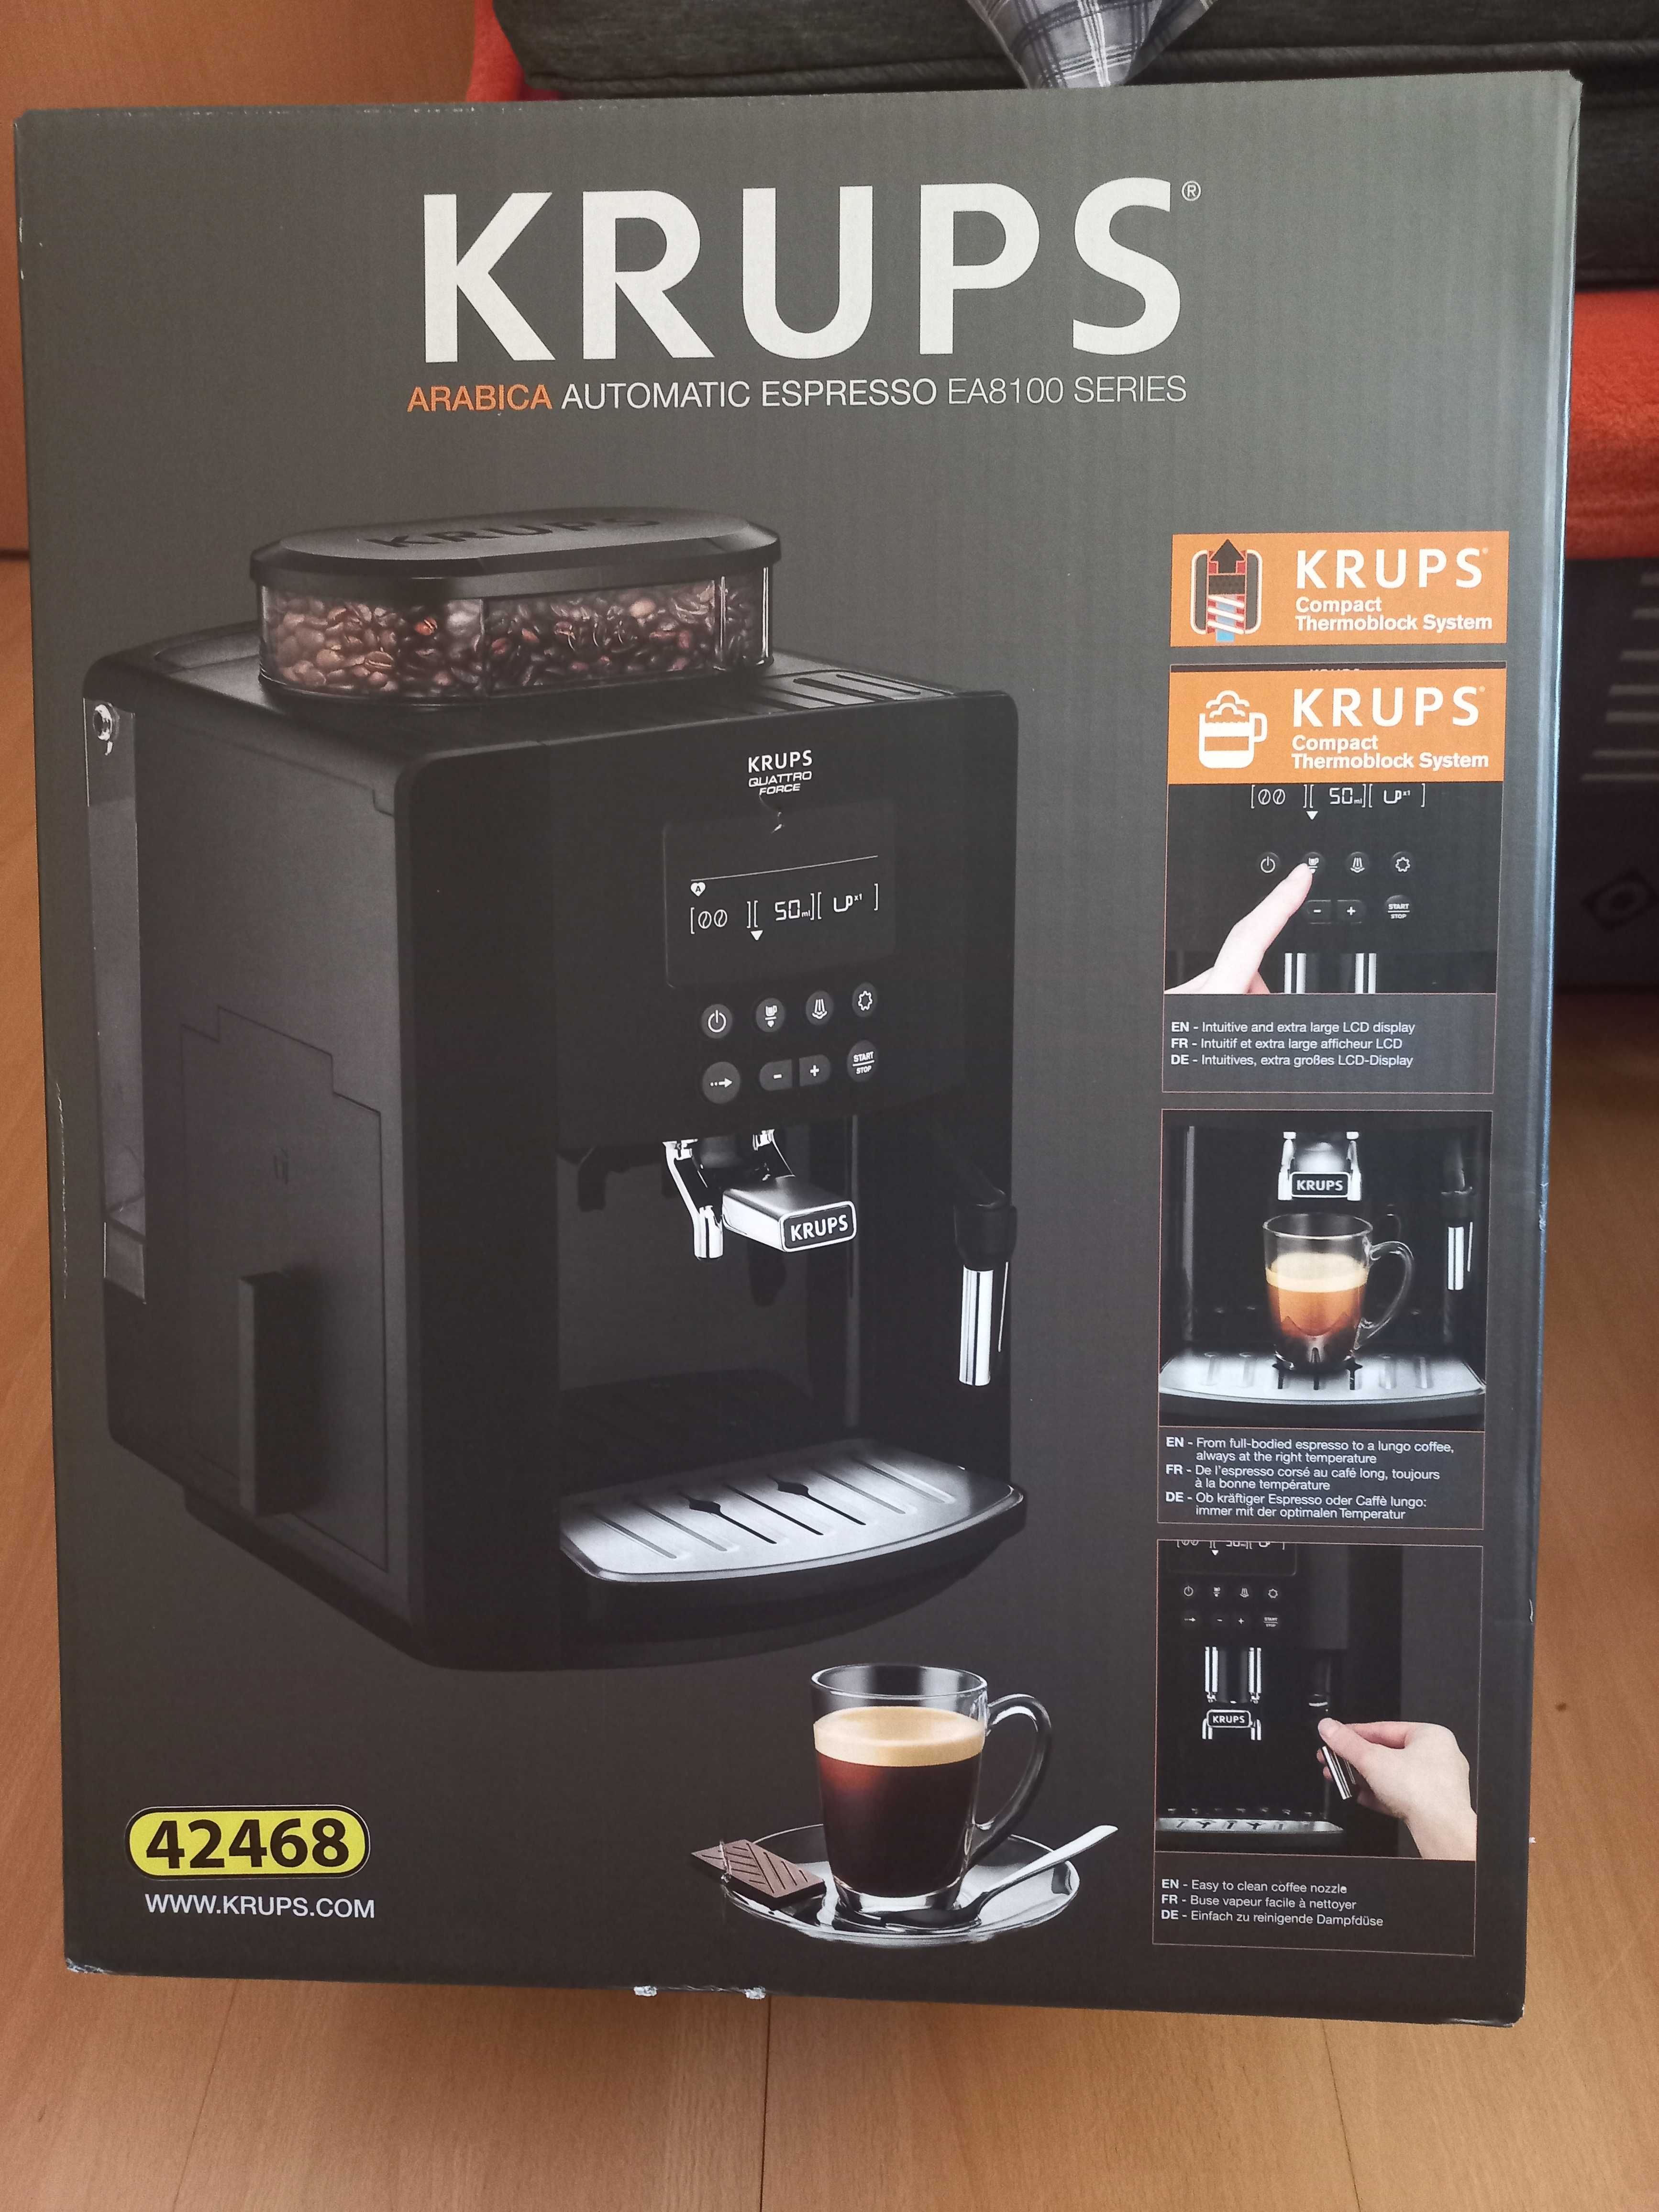 KRUPS: Arabica Automatic Espresso EA8100 Series